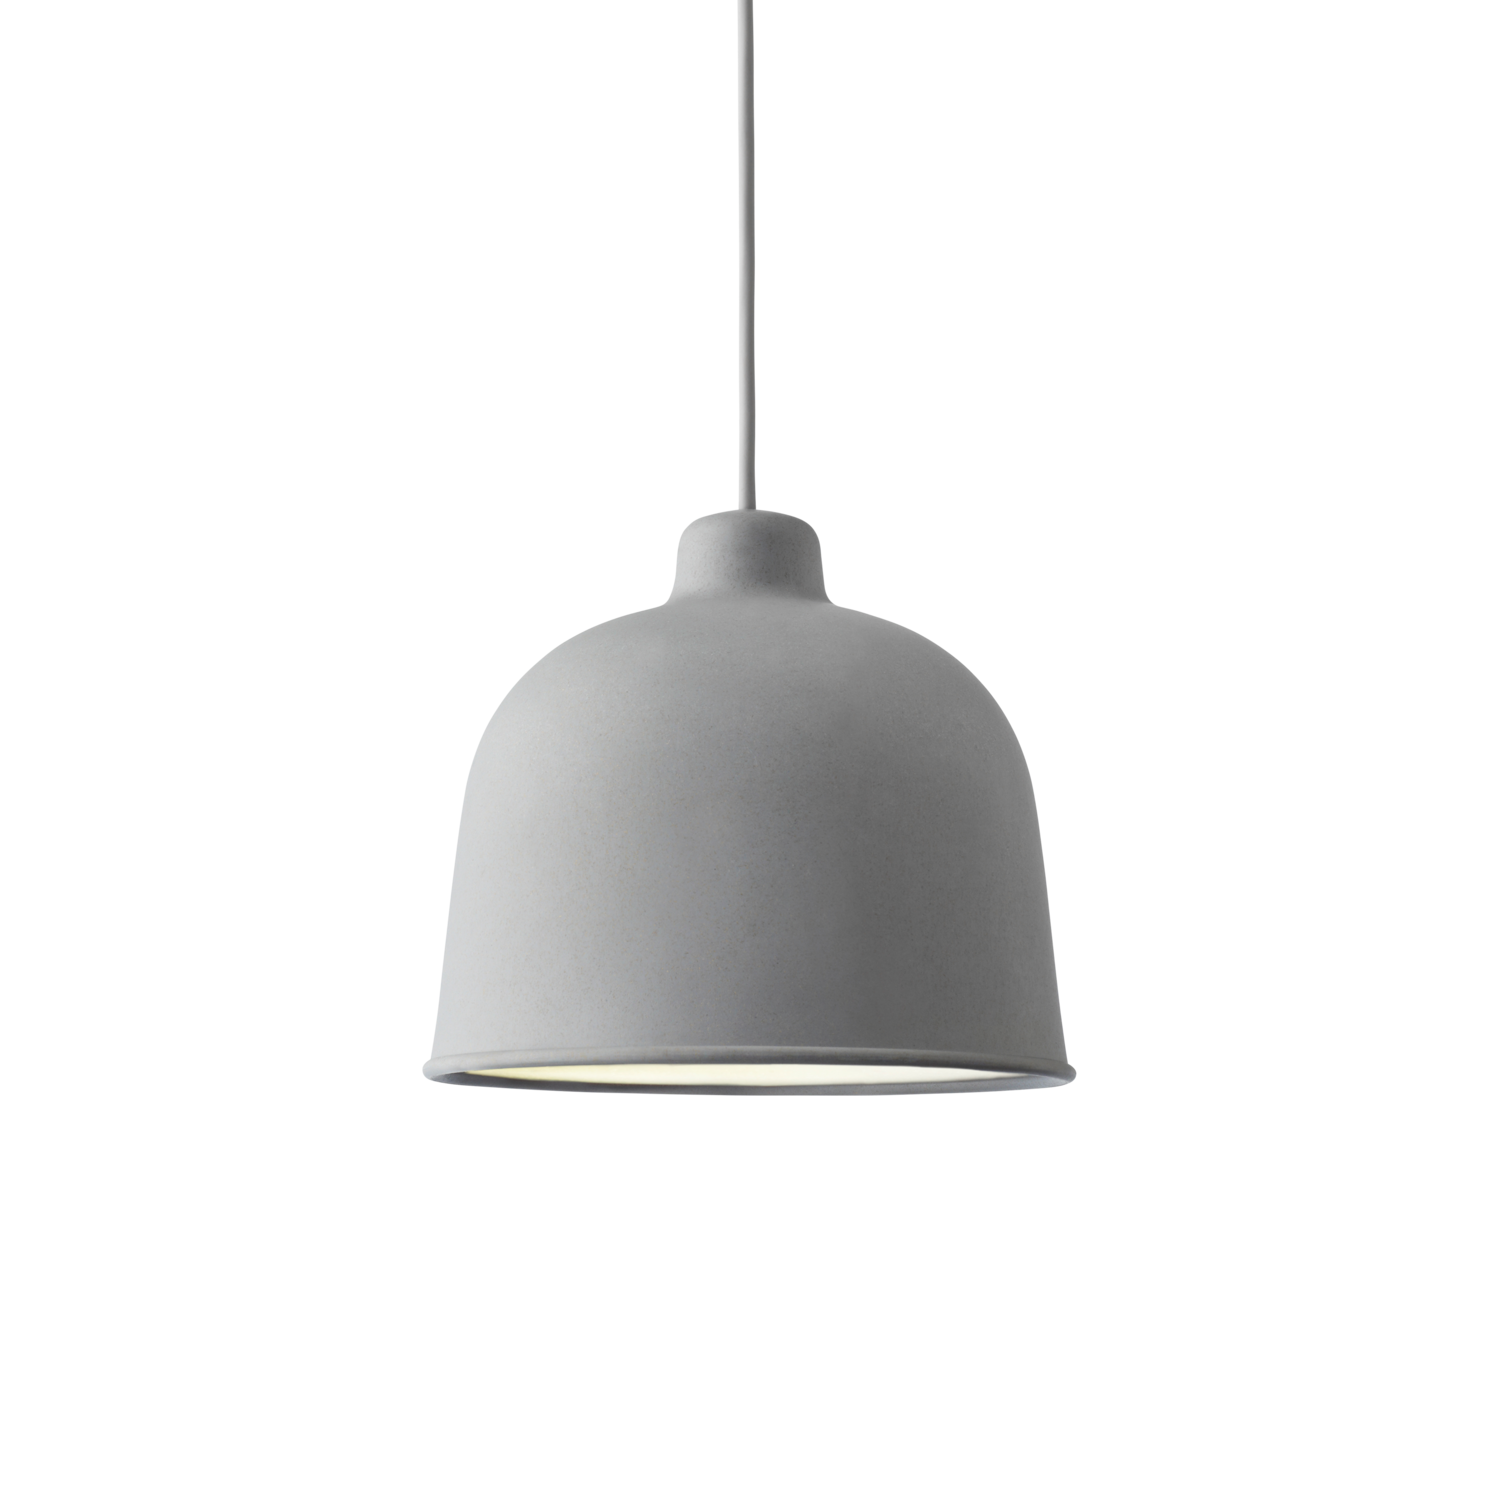 Grain Pendant Lamp | A refreshing update the classic pendant